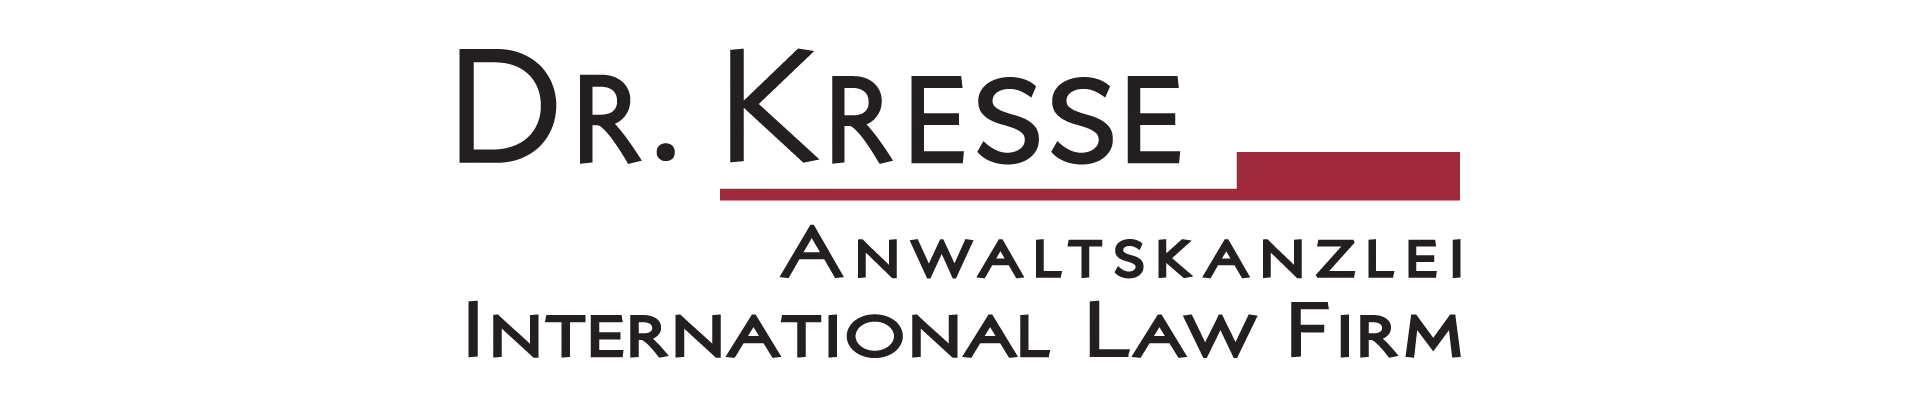 Dr. Kresse International Law Firm